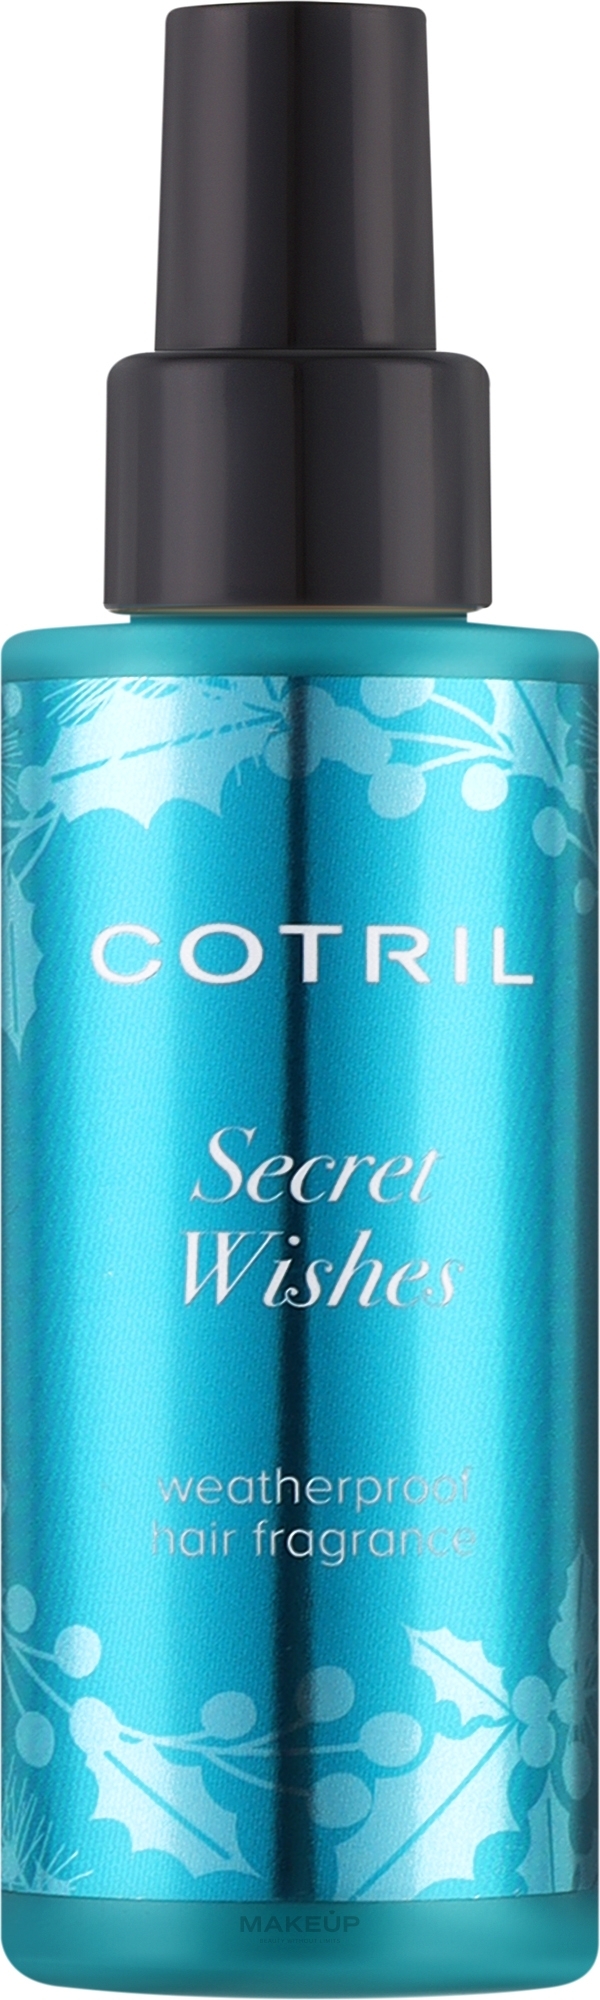 Ароматический спрей для волос - Cotril Secret Wishes Watherproof Hair Fragrance — фото 100ml